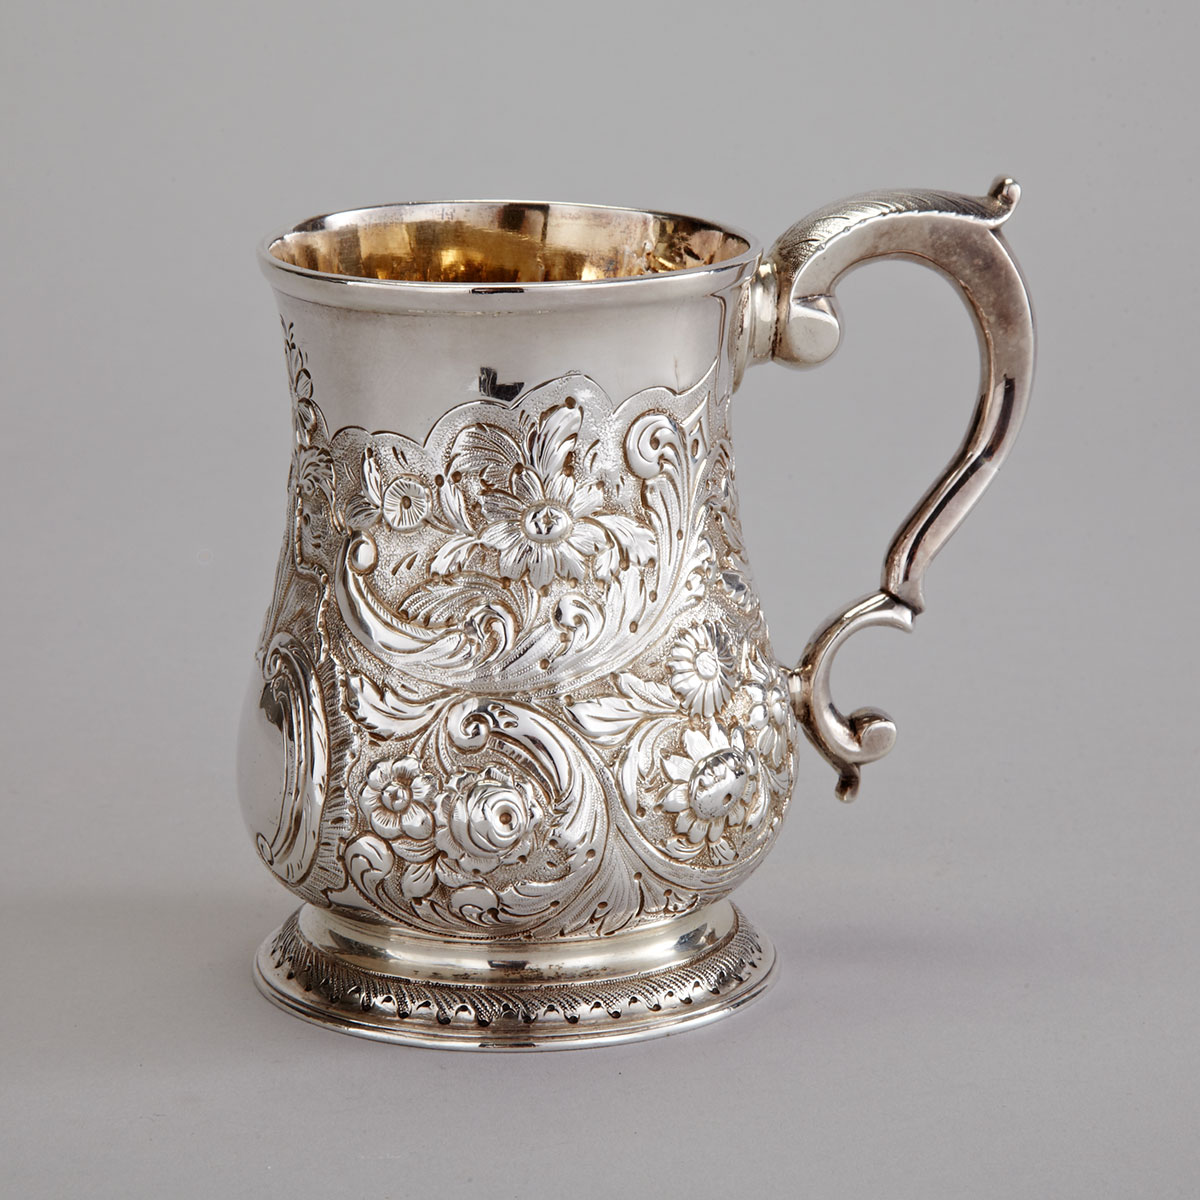 George II Silver Mug, Thomas Bamford, London, 1737